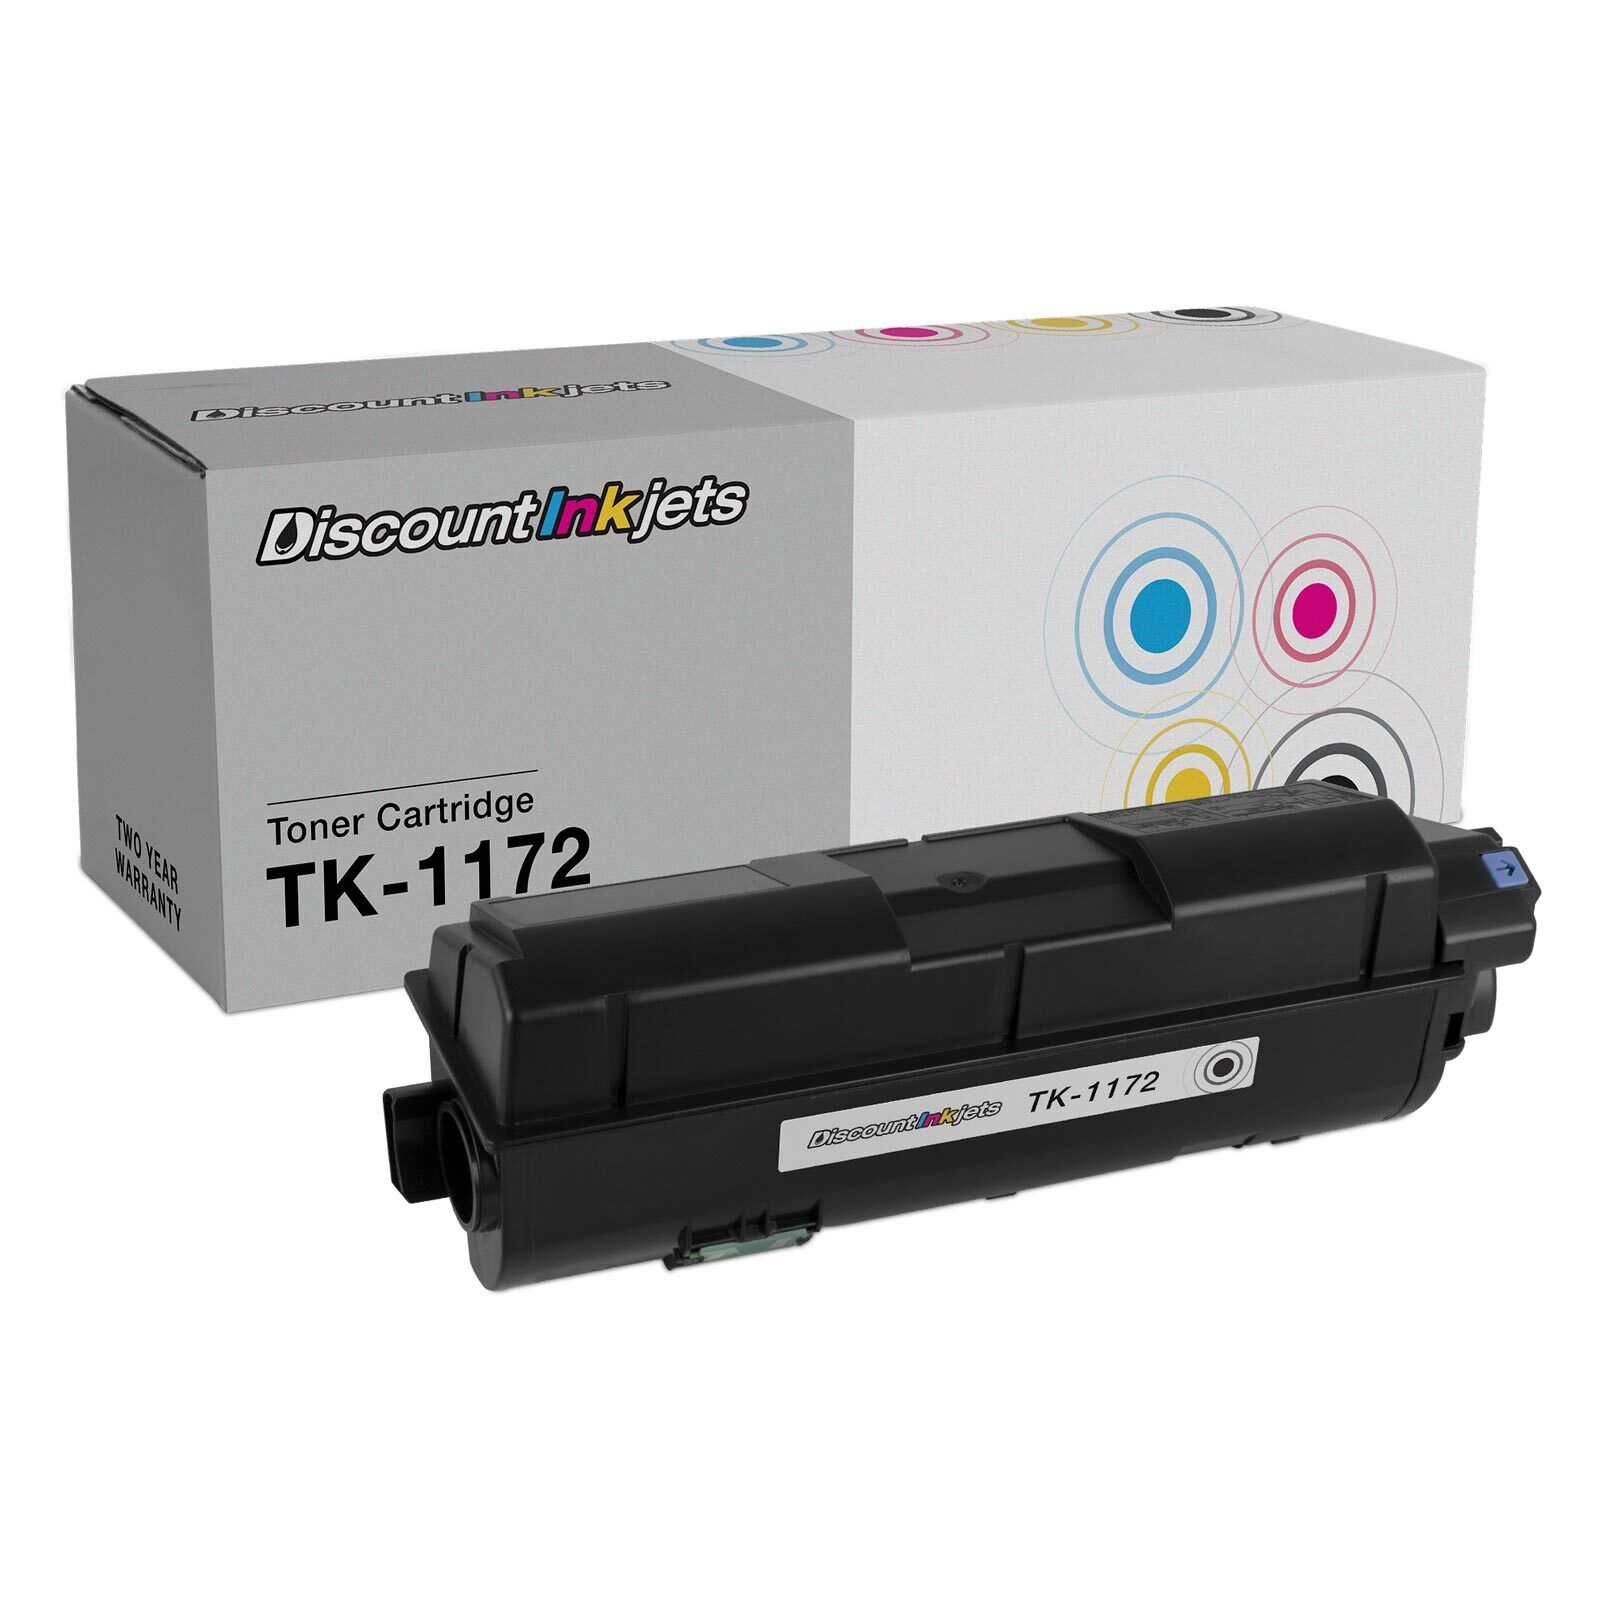 Toner Cartridge Replacement for Kyocera TK-1172 1T02S50US0 (Black)